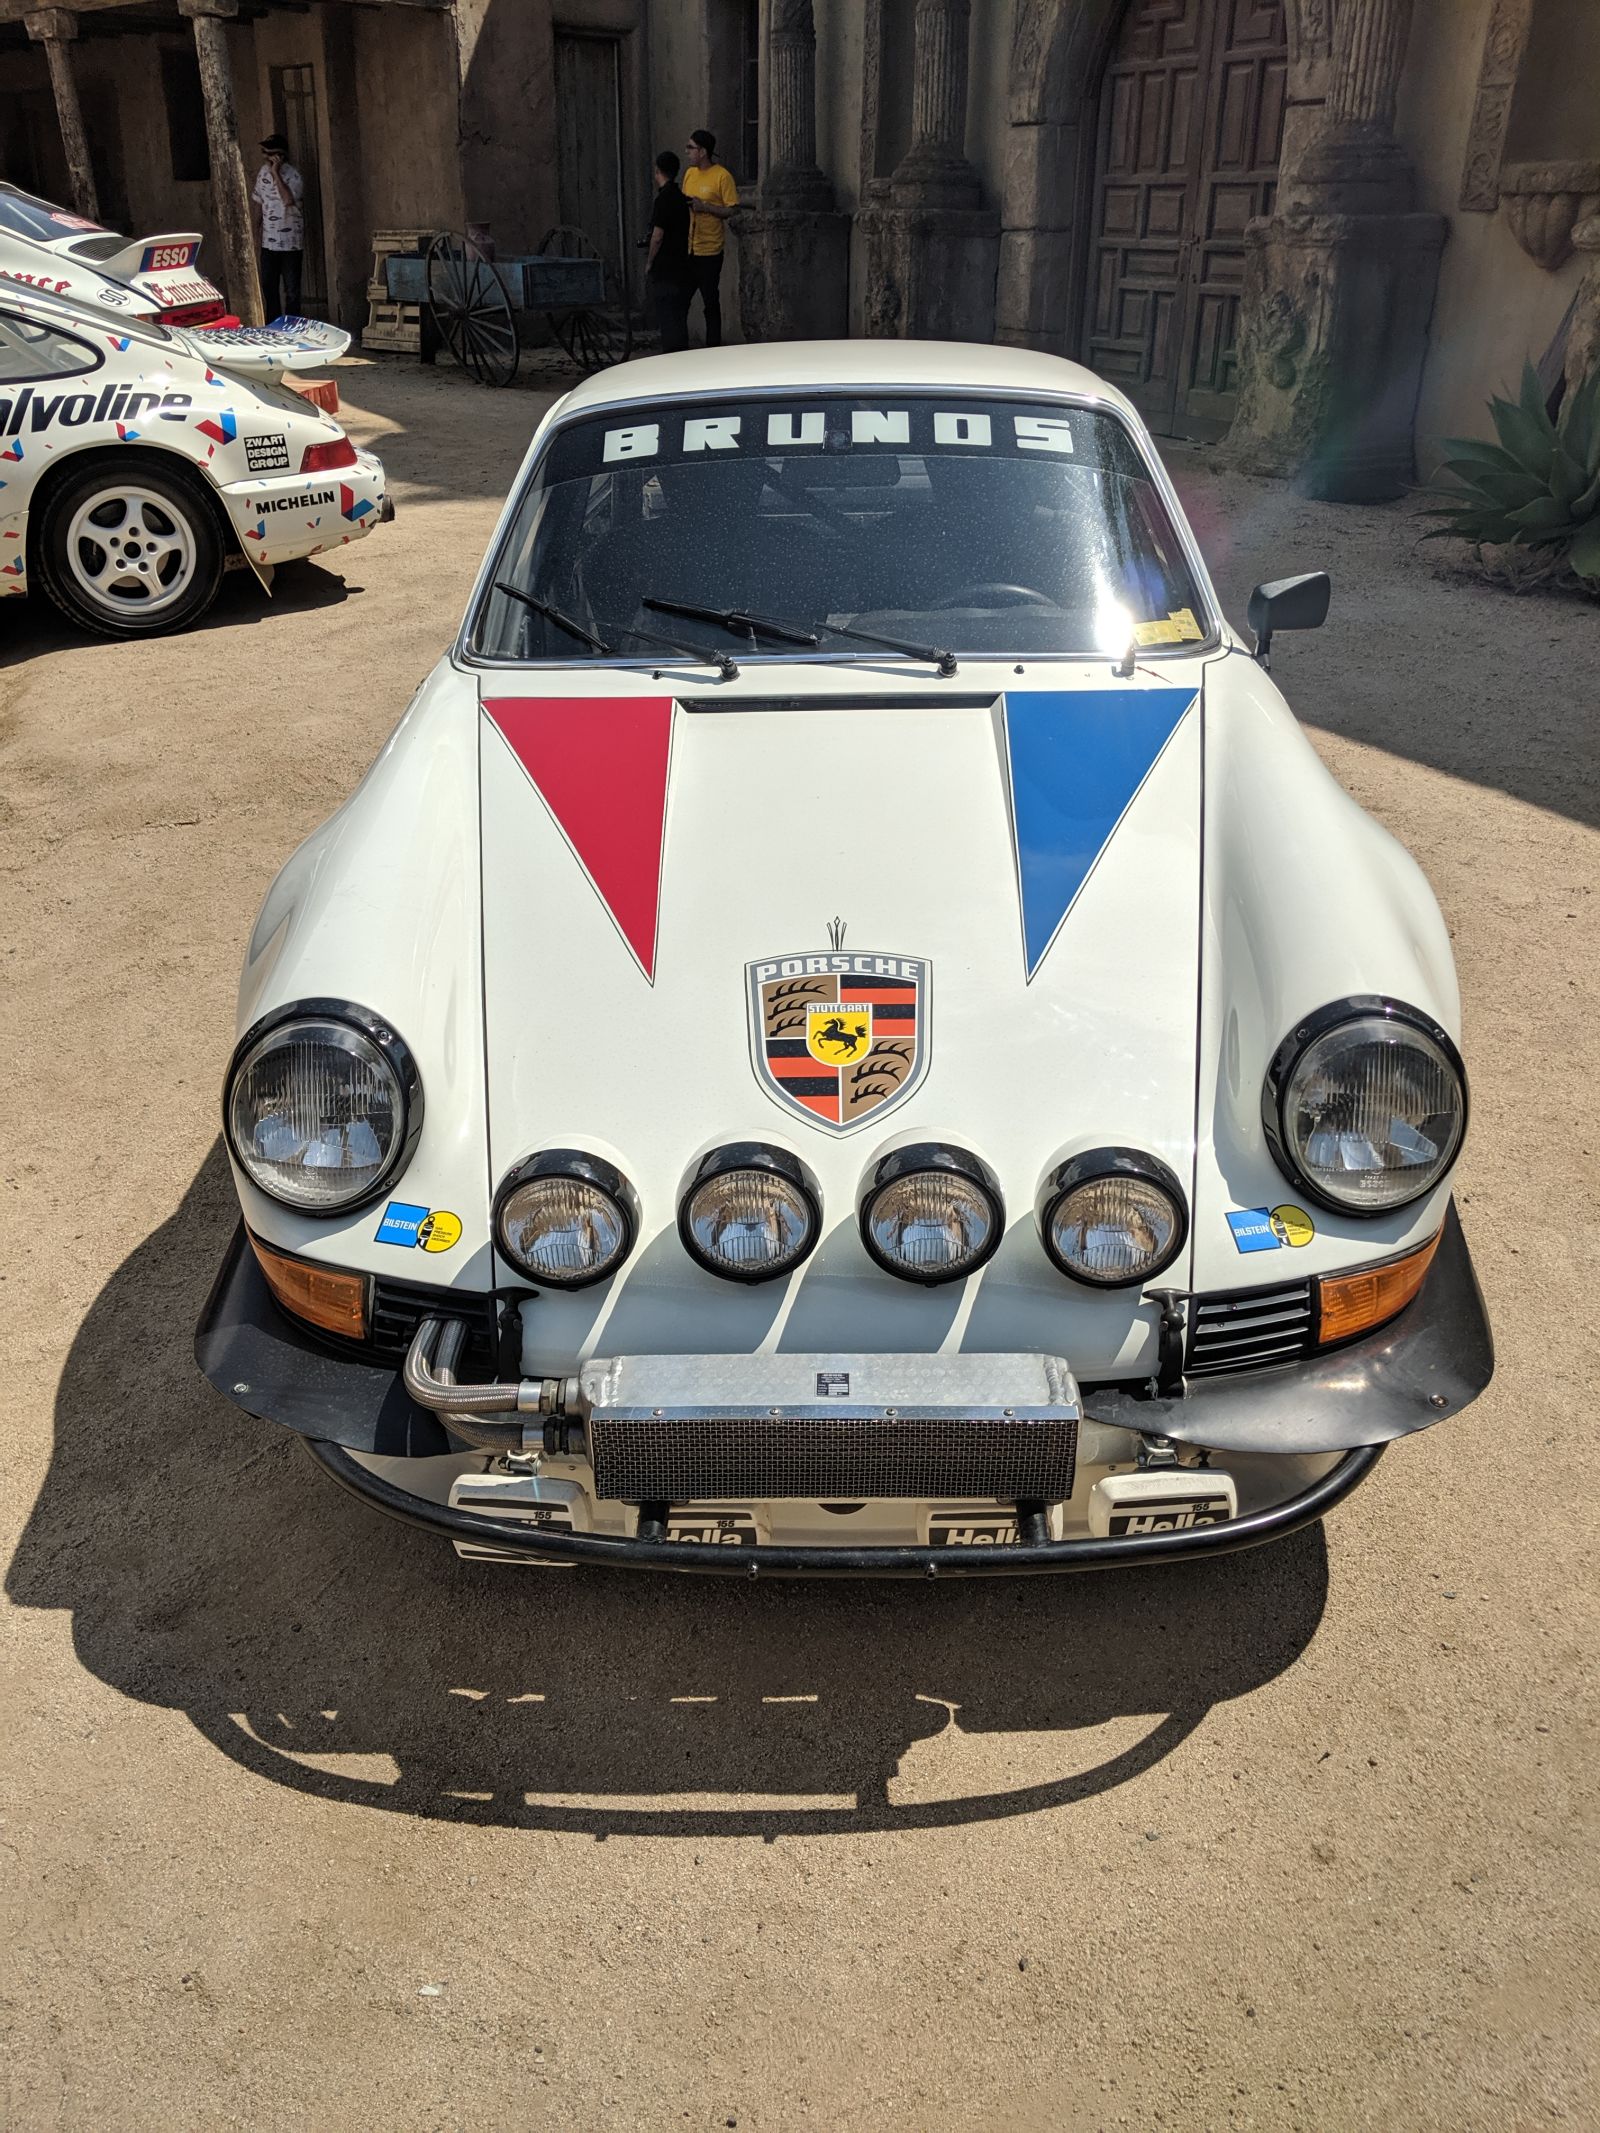 Bruno Kreibich’s super cool rally car, in service for decades